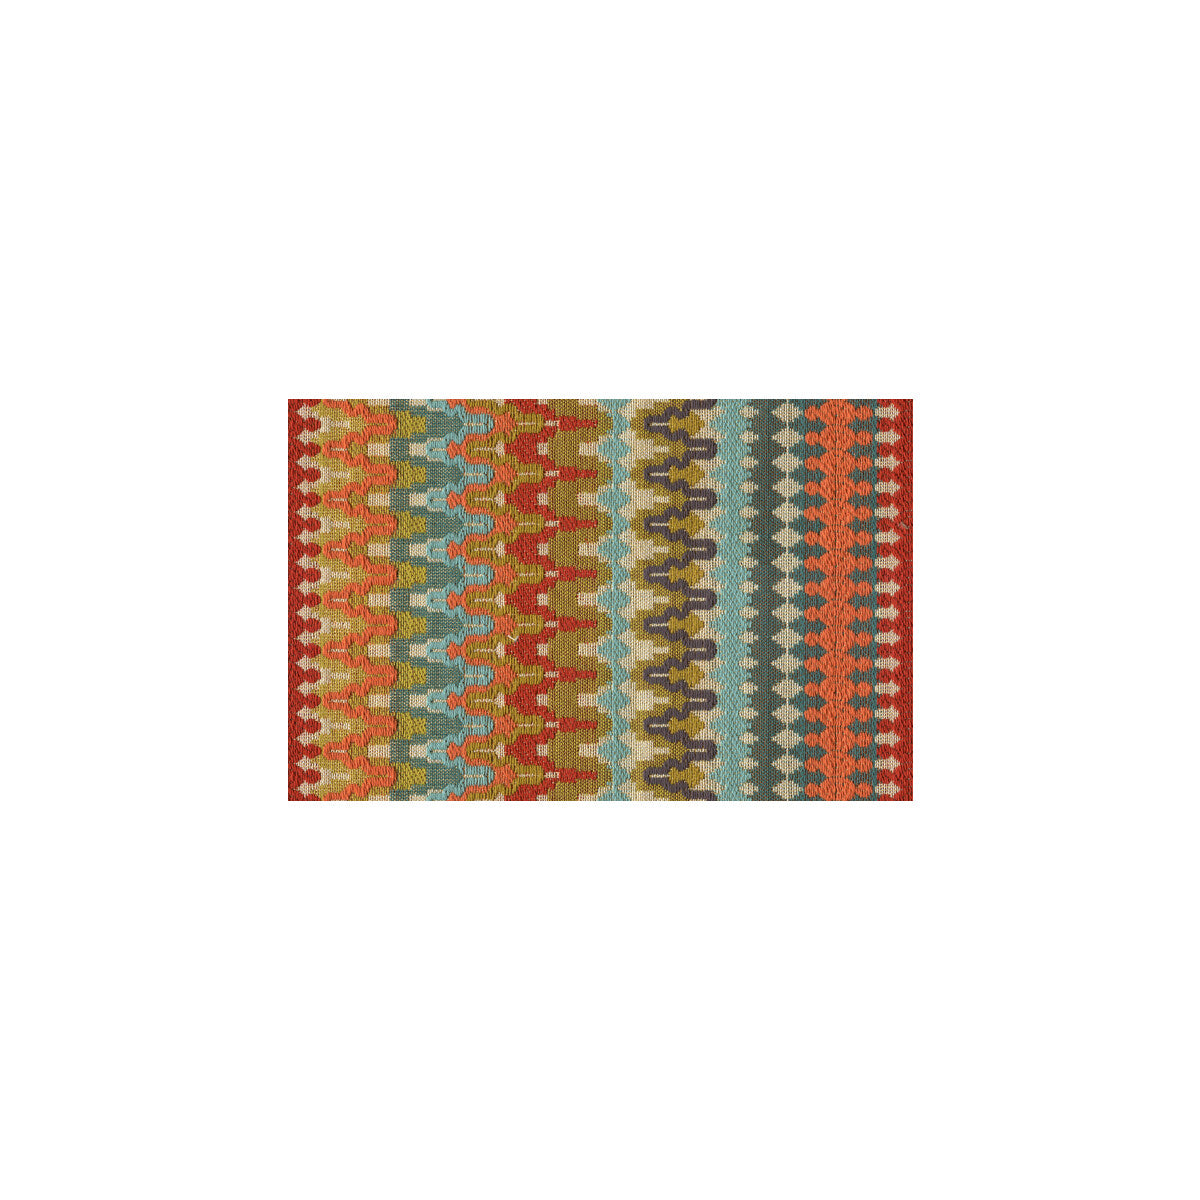 Kravet Design fabric in 32631-512 color - pattern 32631.512.0 - by Kravet Design in the Exotic Travels collection